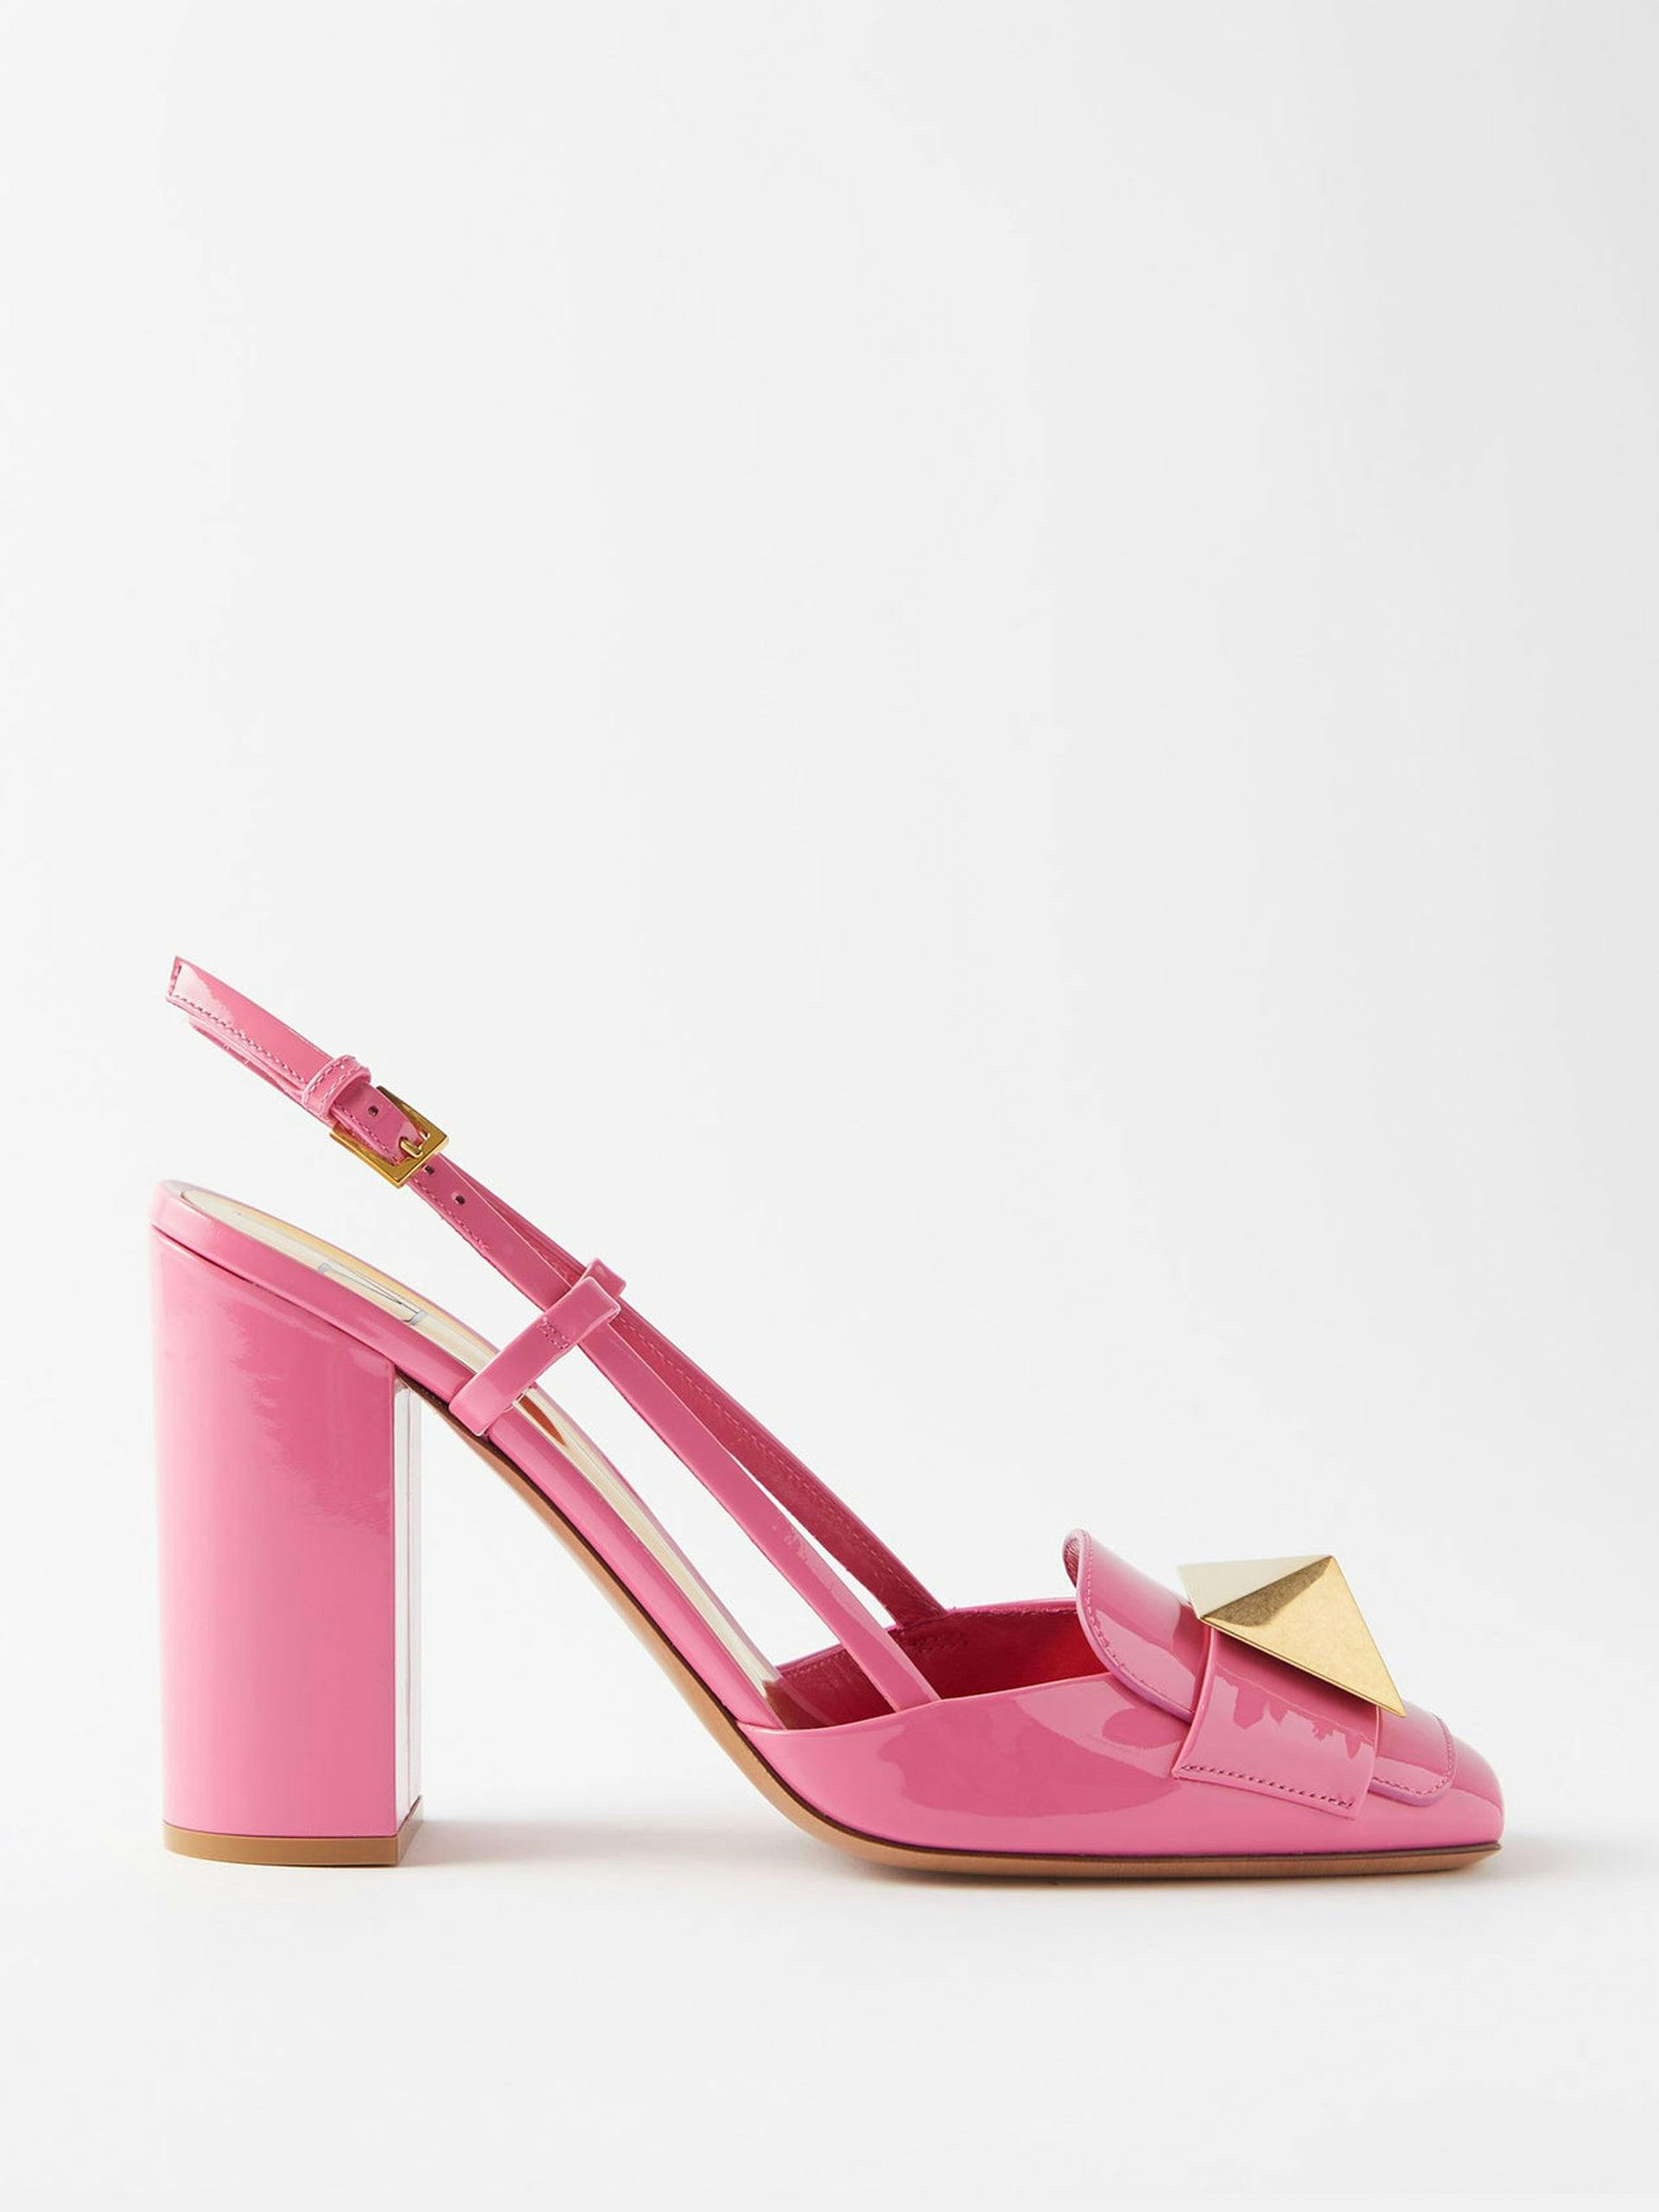 Pink heels with stud